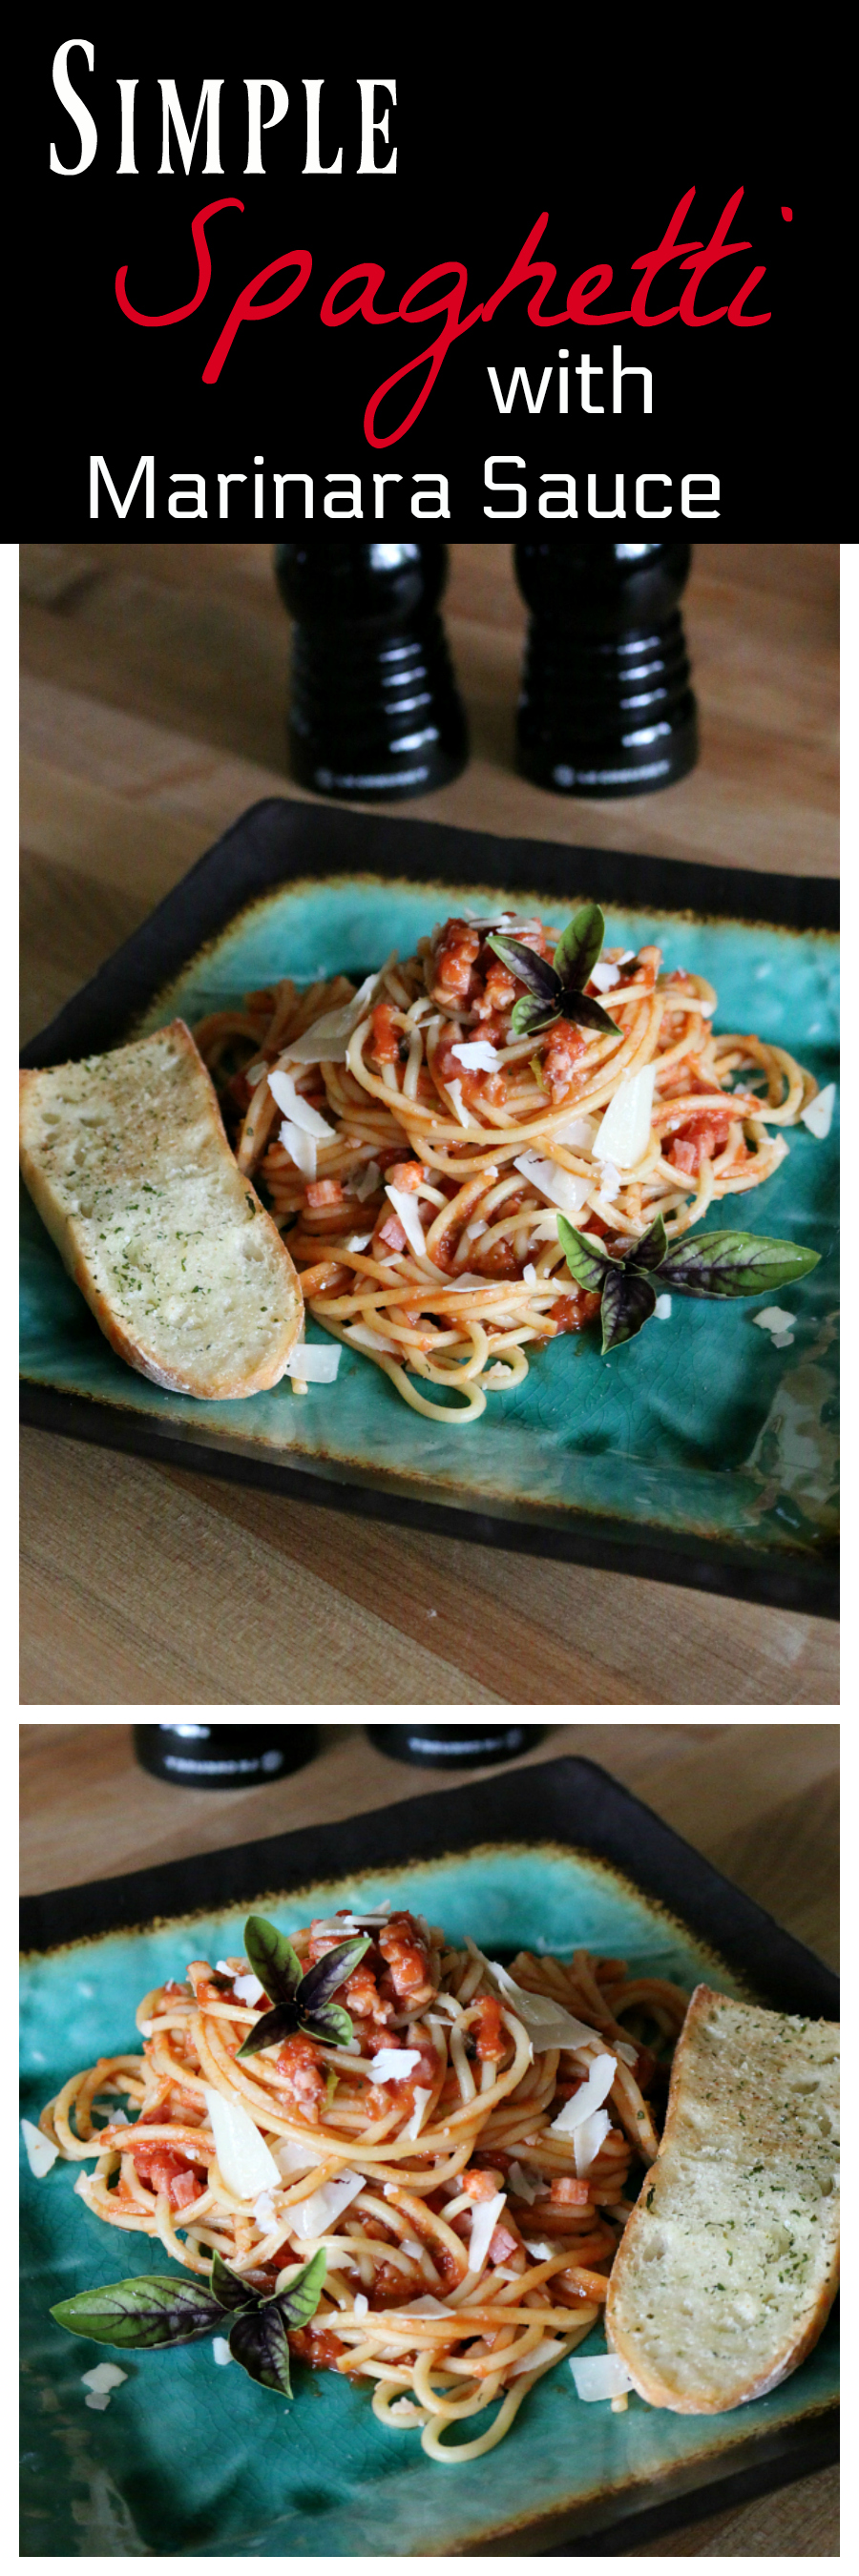 Simple Spaghetti with Marinara Sauce CeceliasGoodStuff.com Good Food for Good People